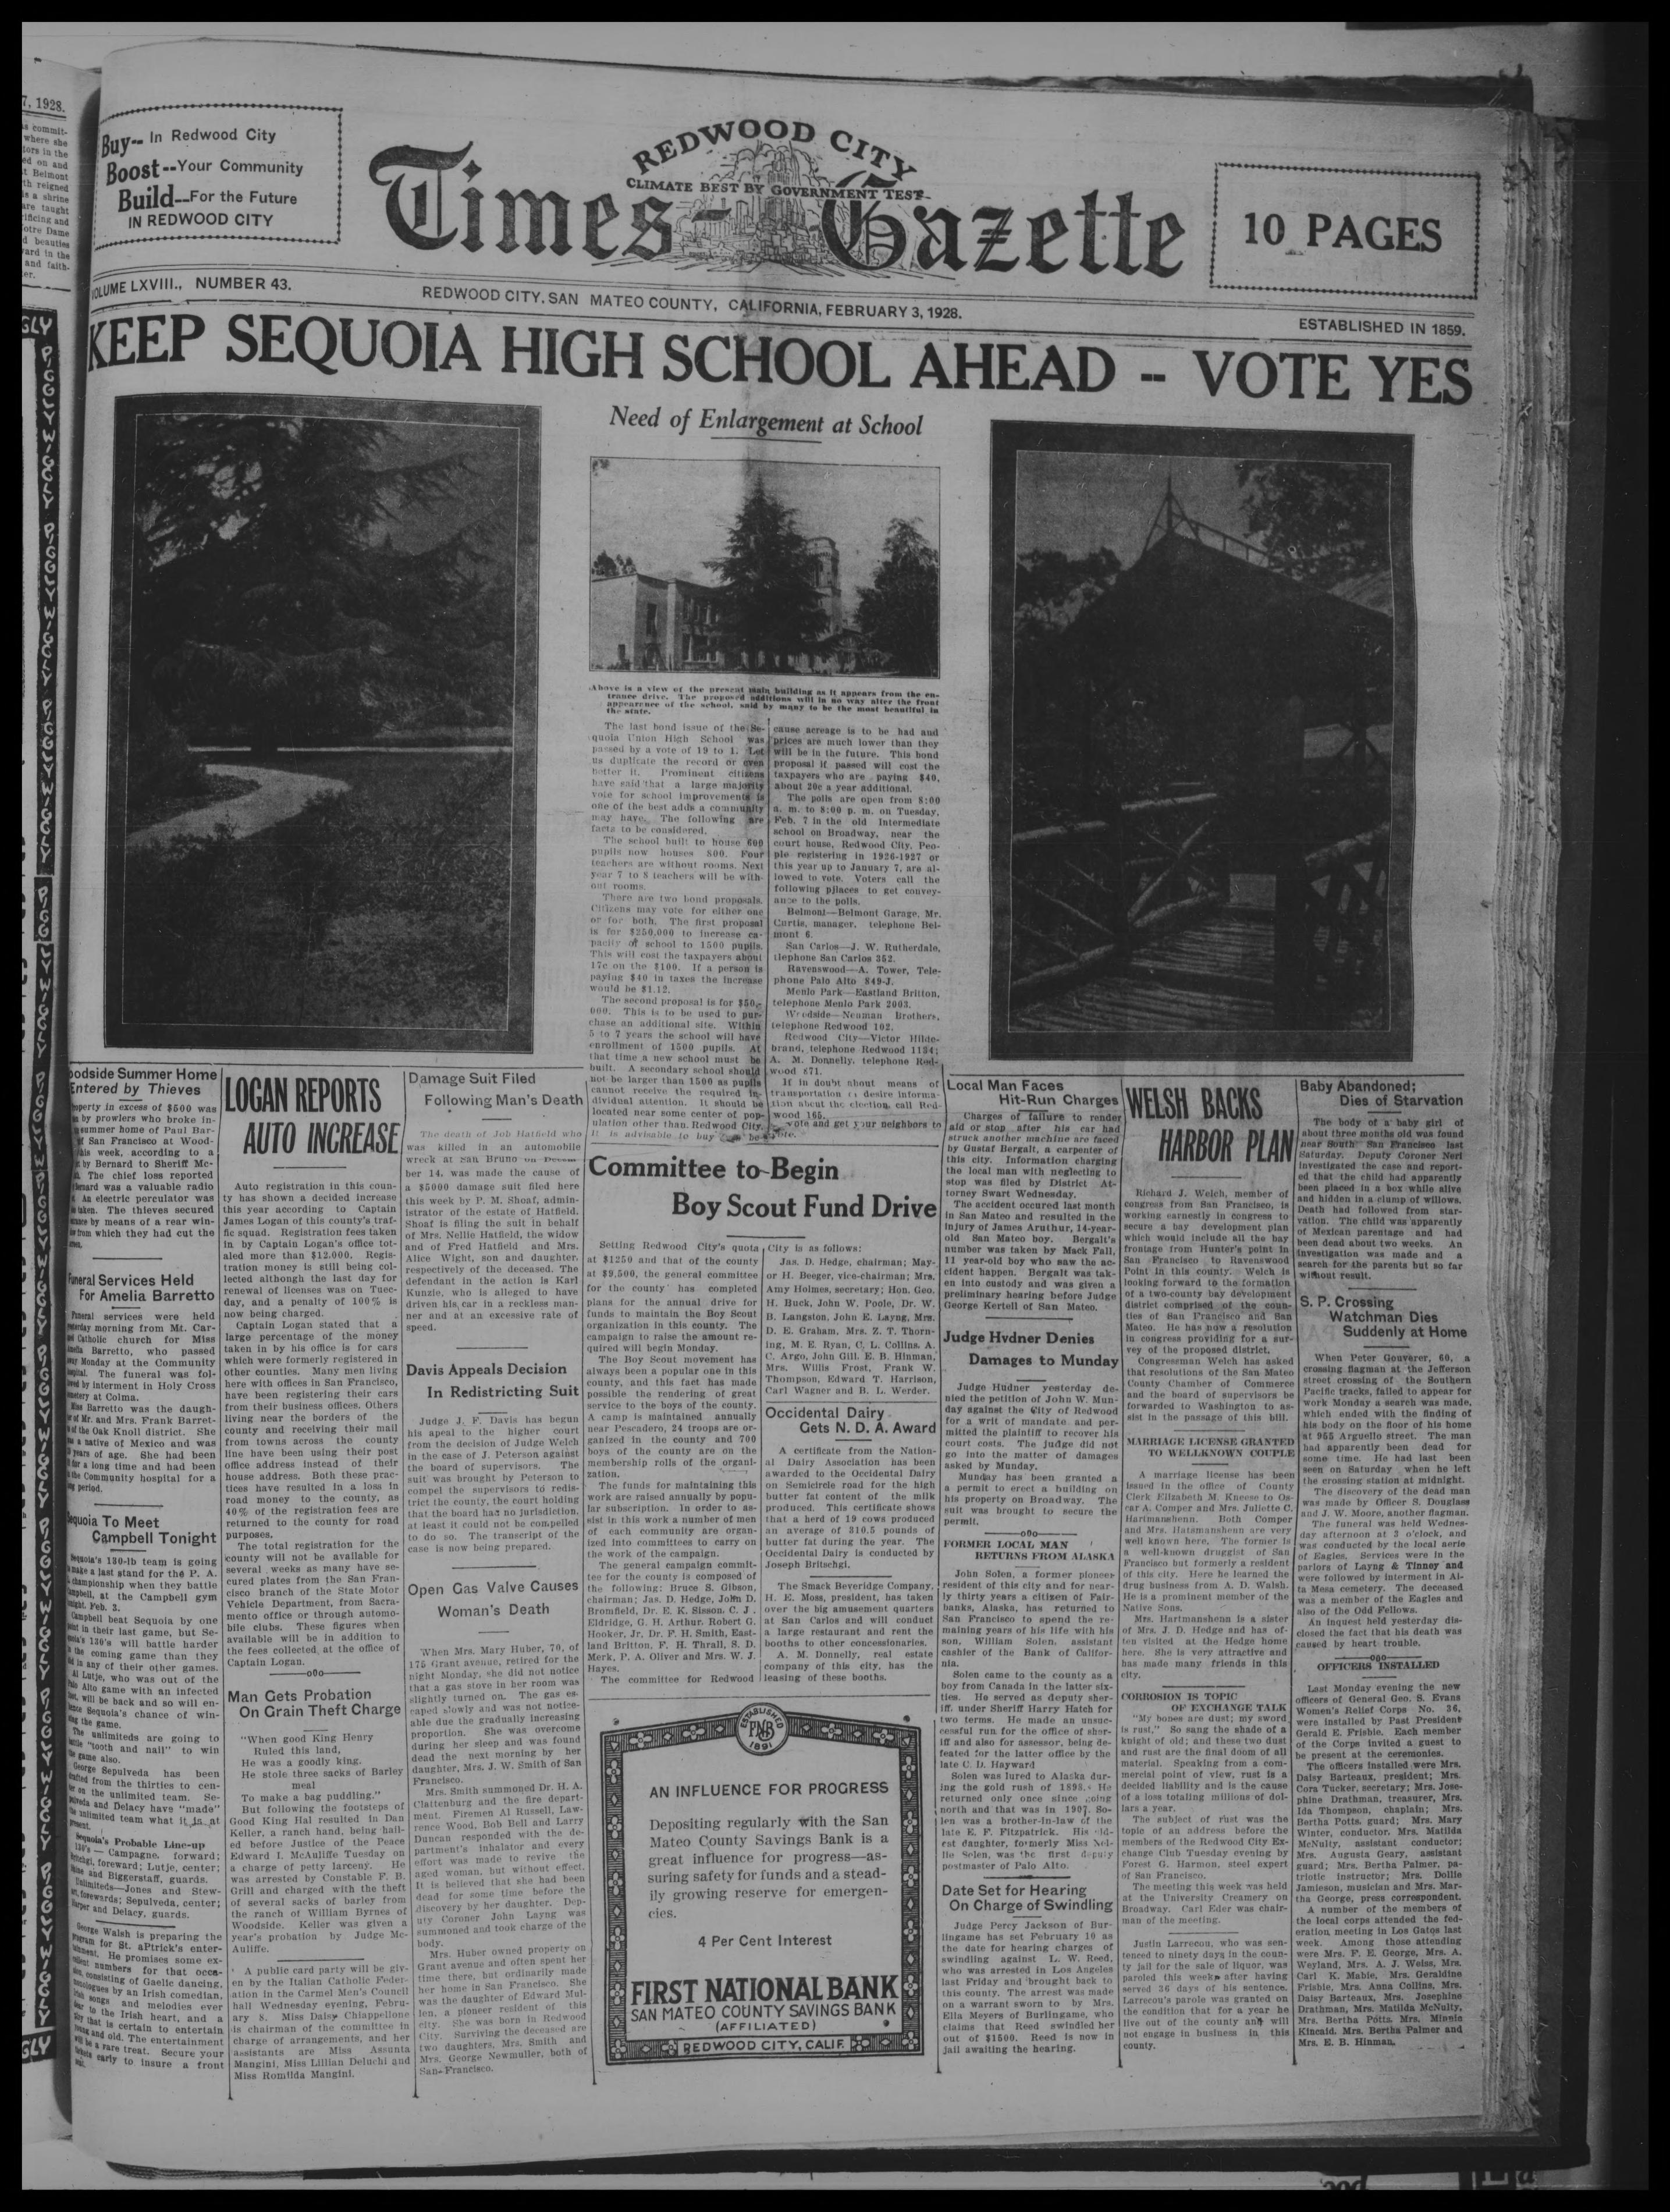 Times Gazette 1928-02-03 | California Revealed